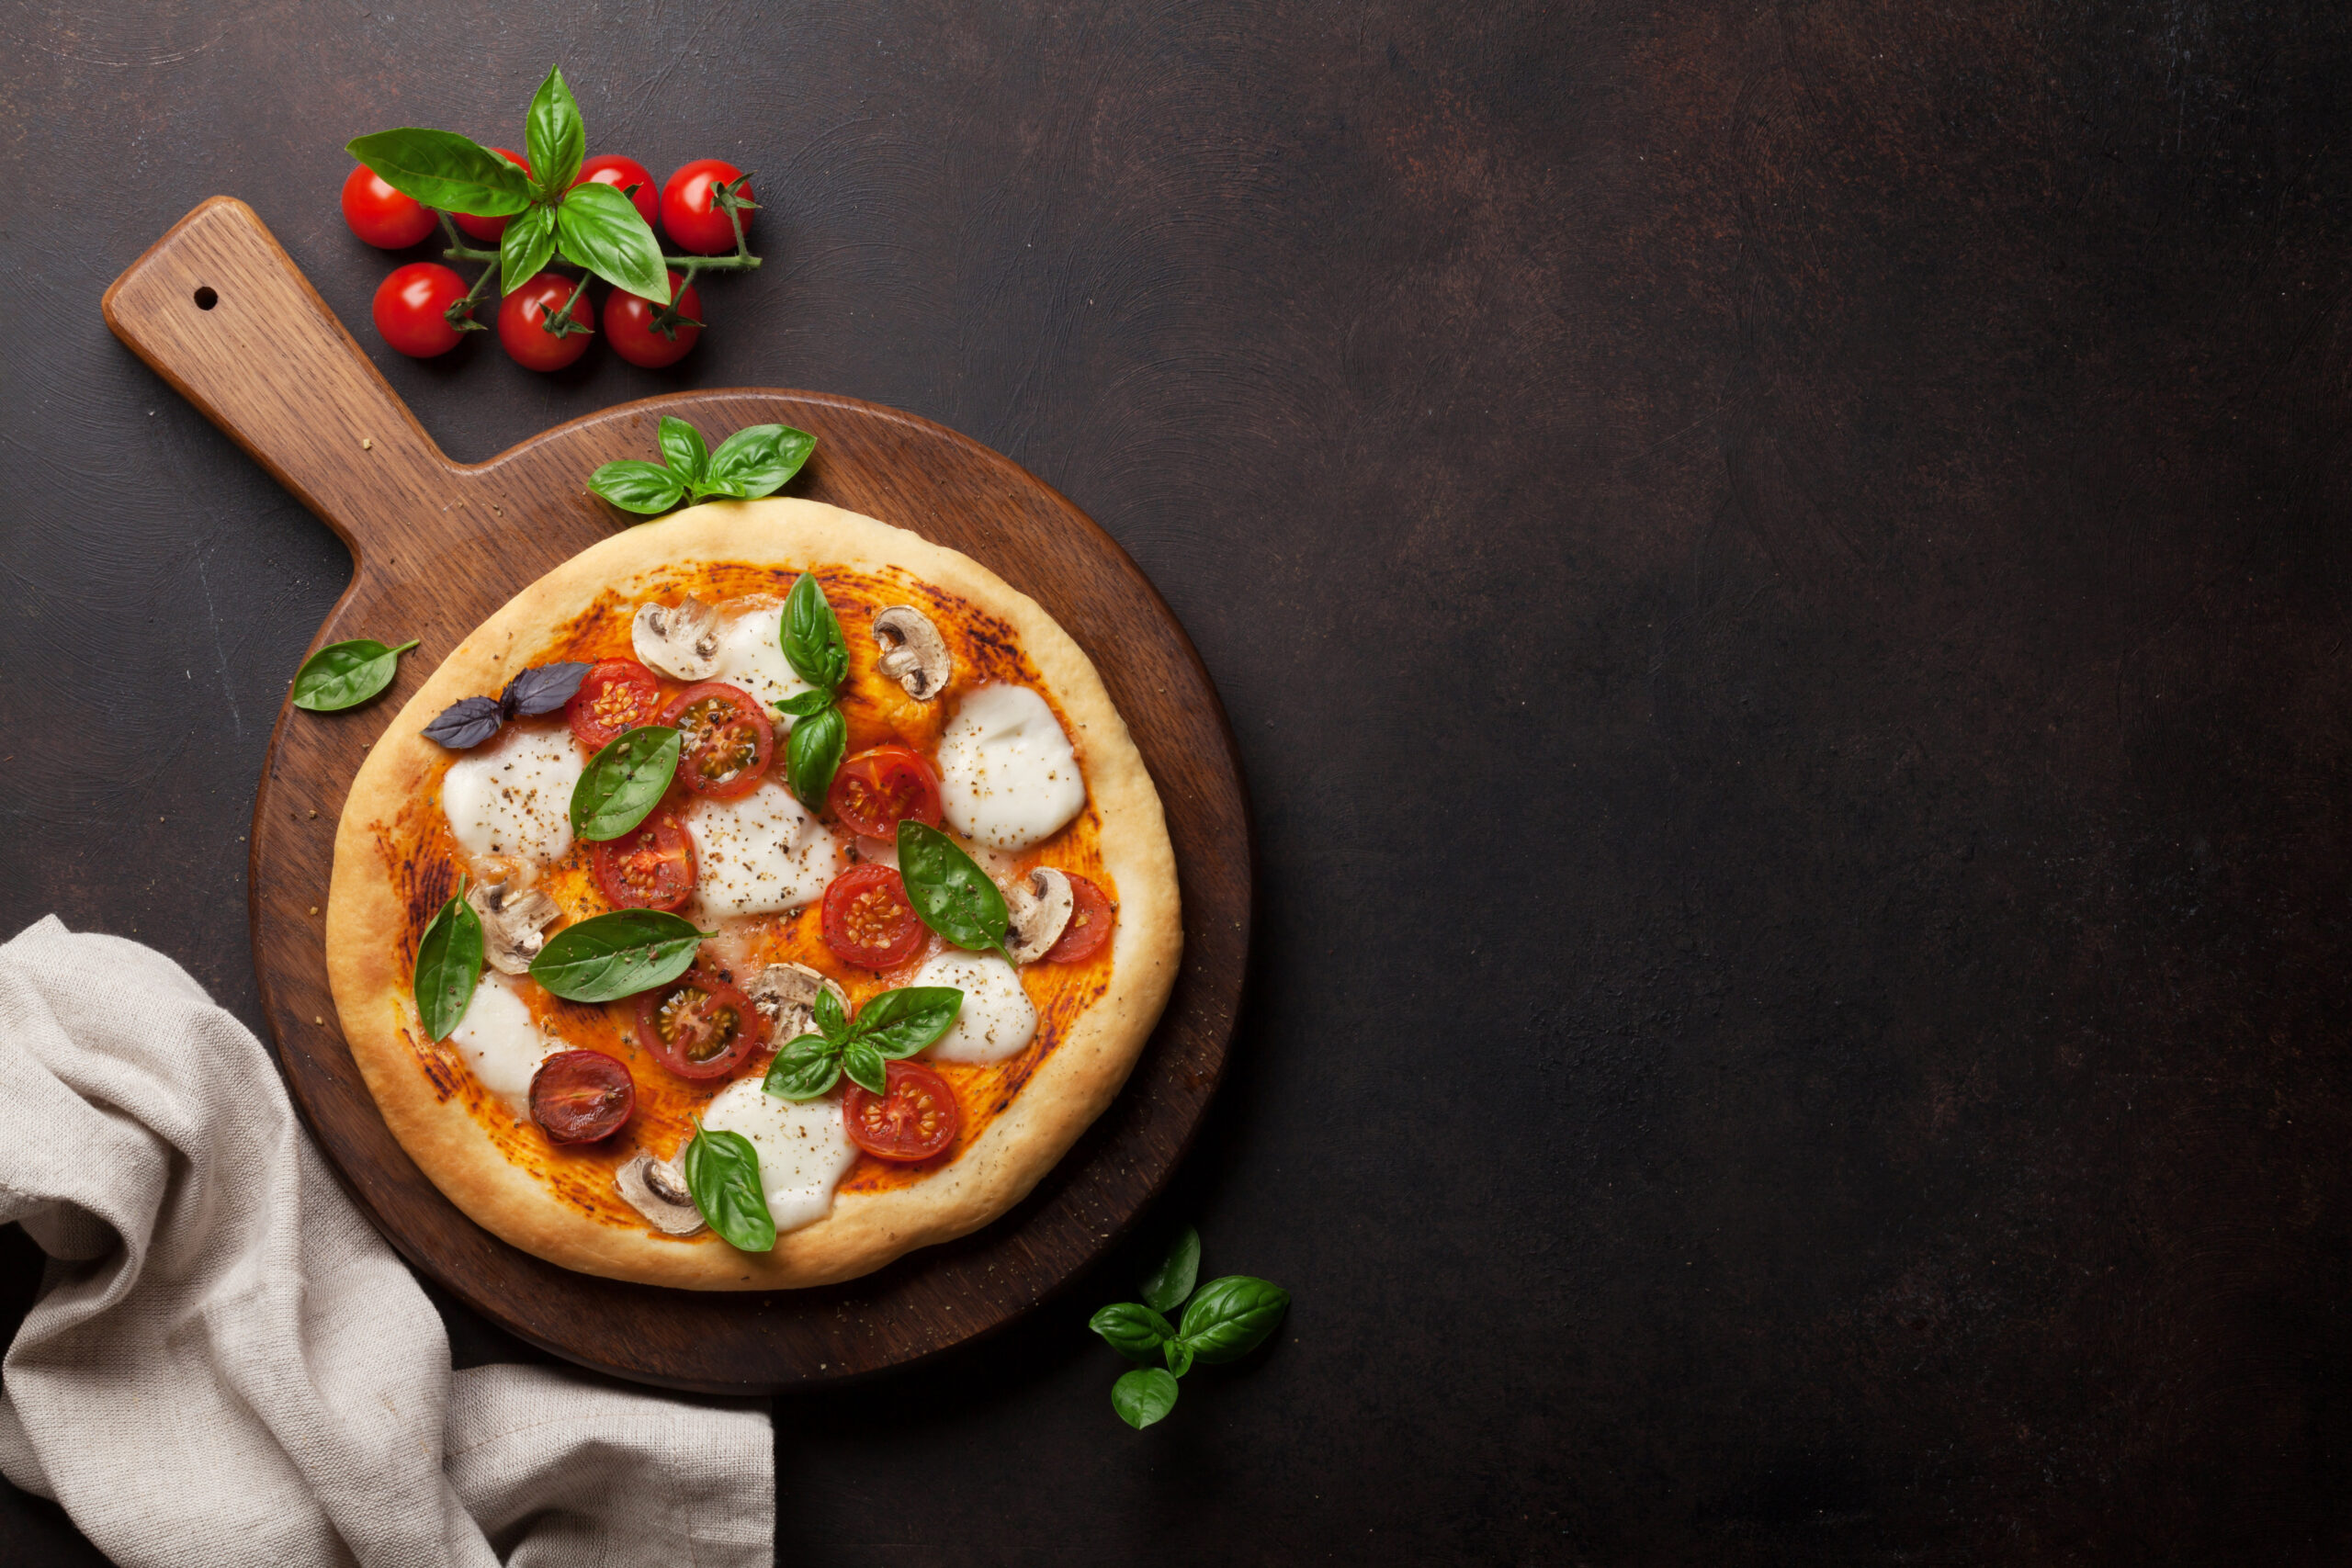 Italian pizza with tomatoes, mozzarella and basil